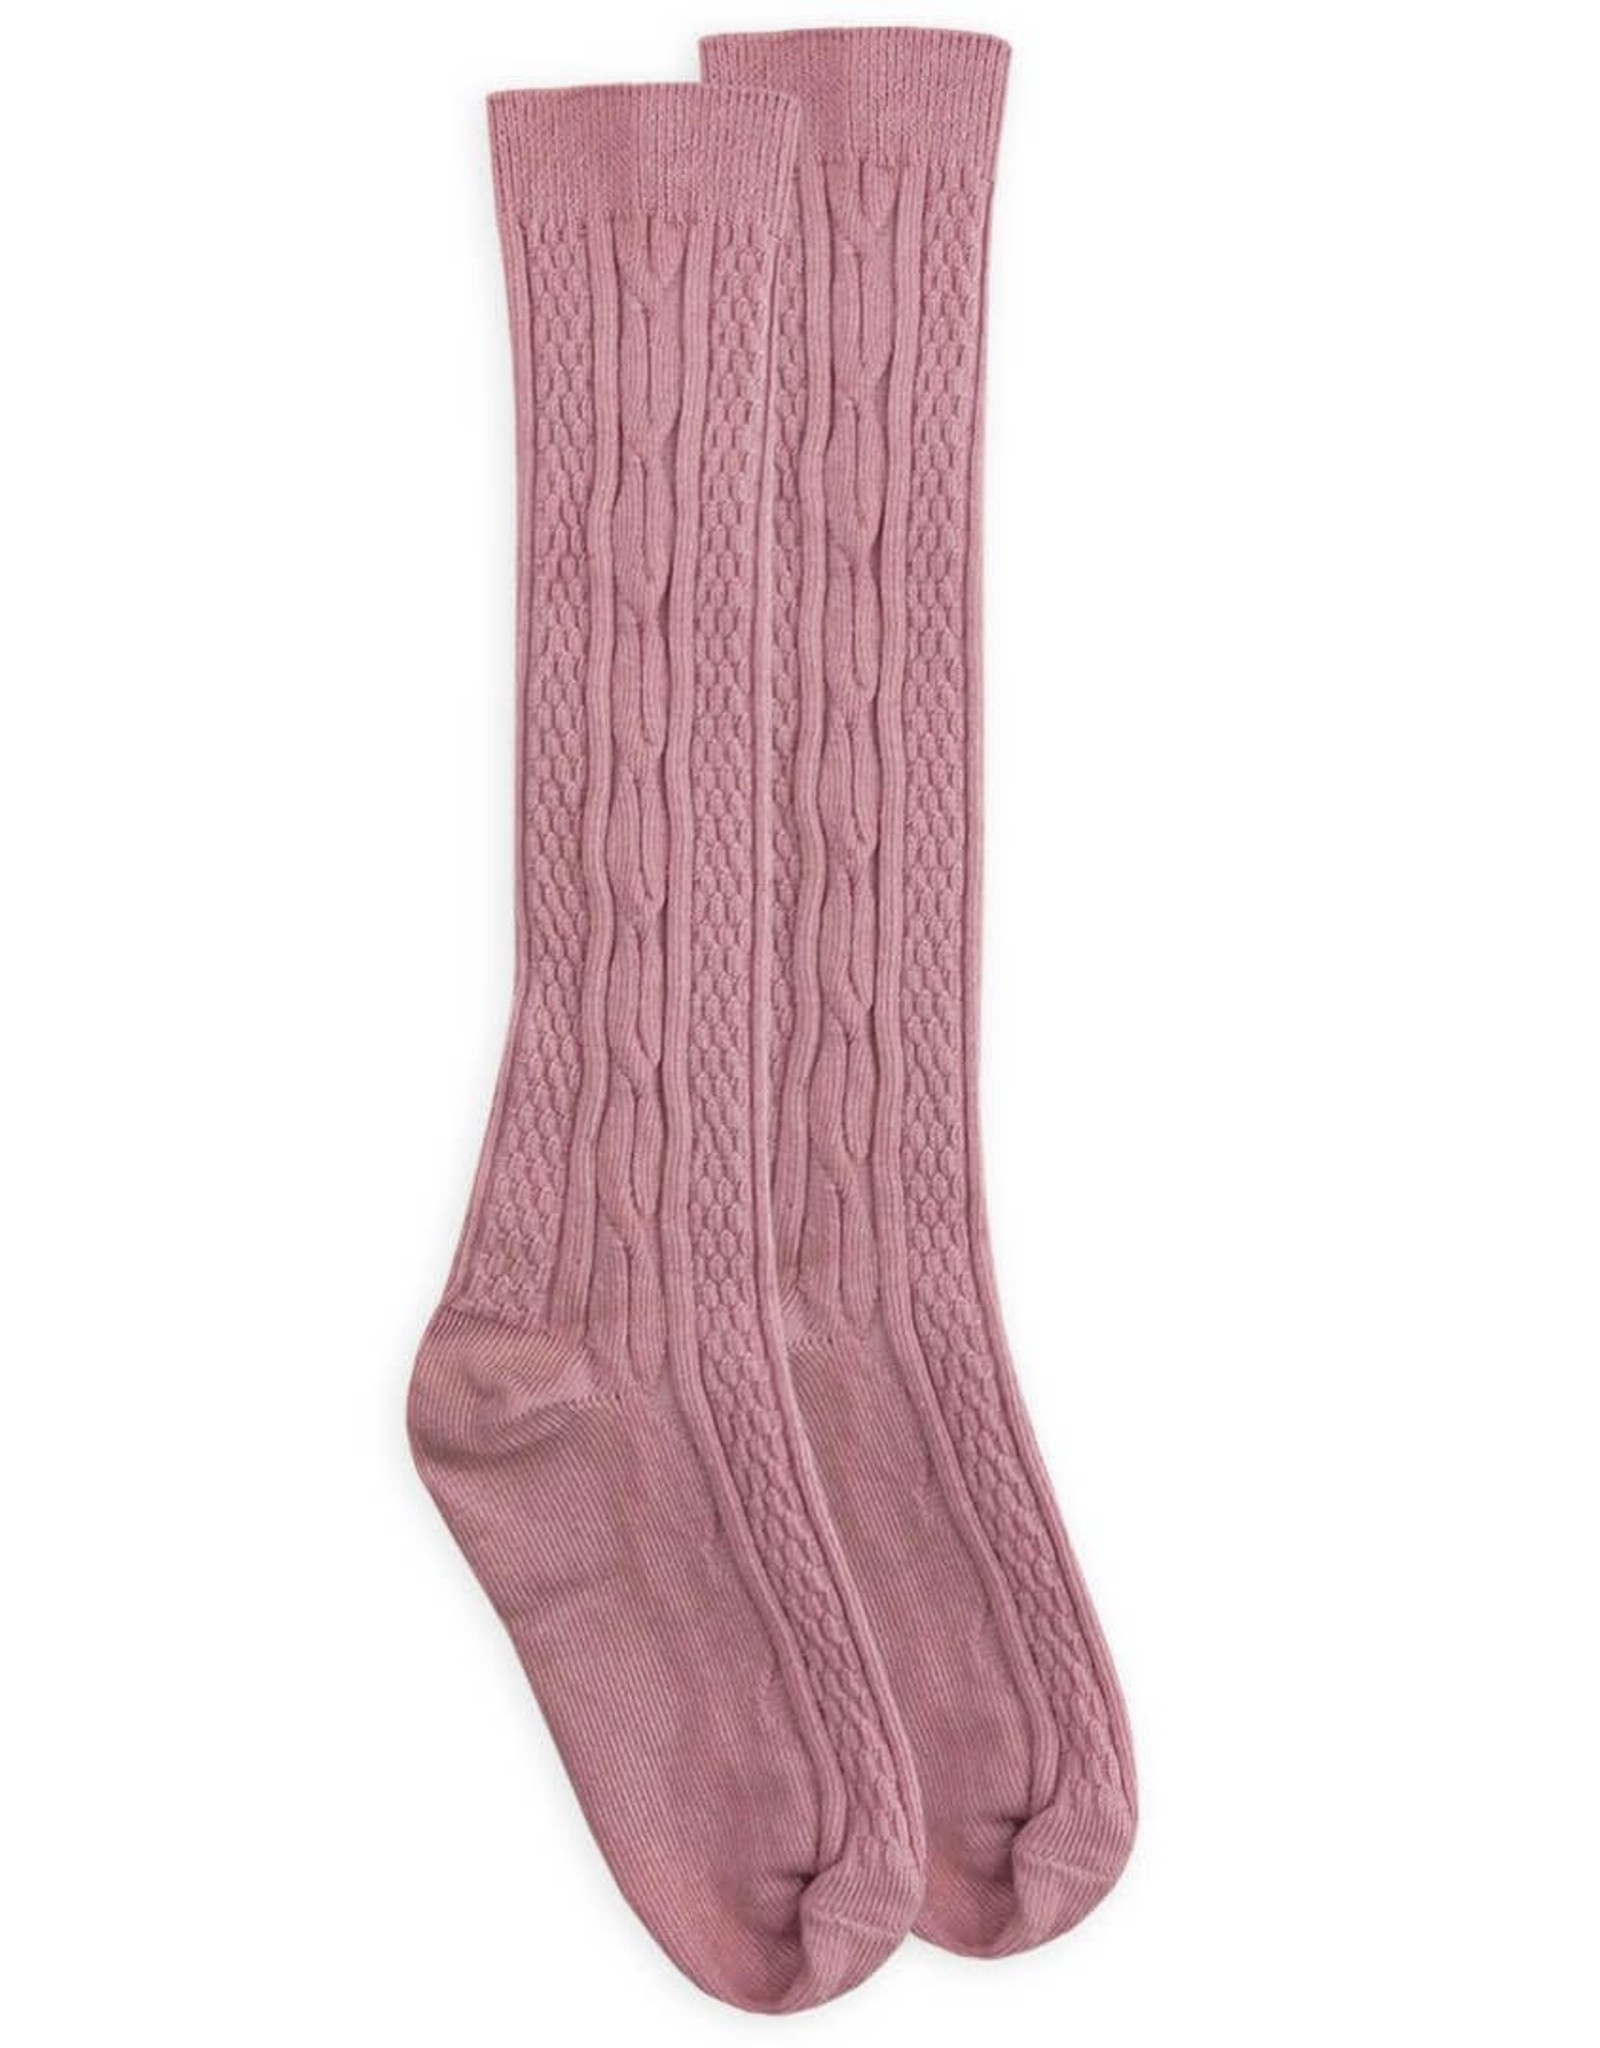 Jefferies Socks Cable Knit Knee Highs - Mauve